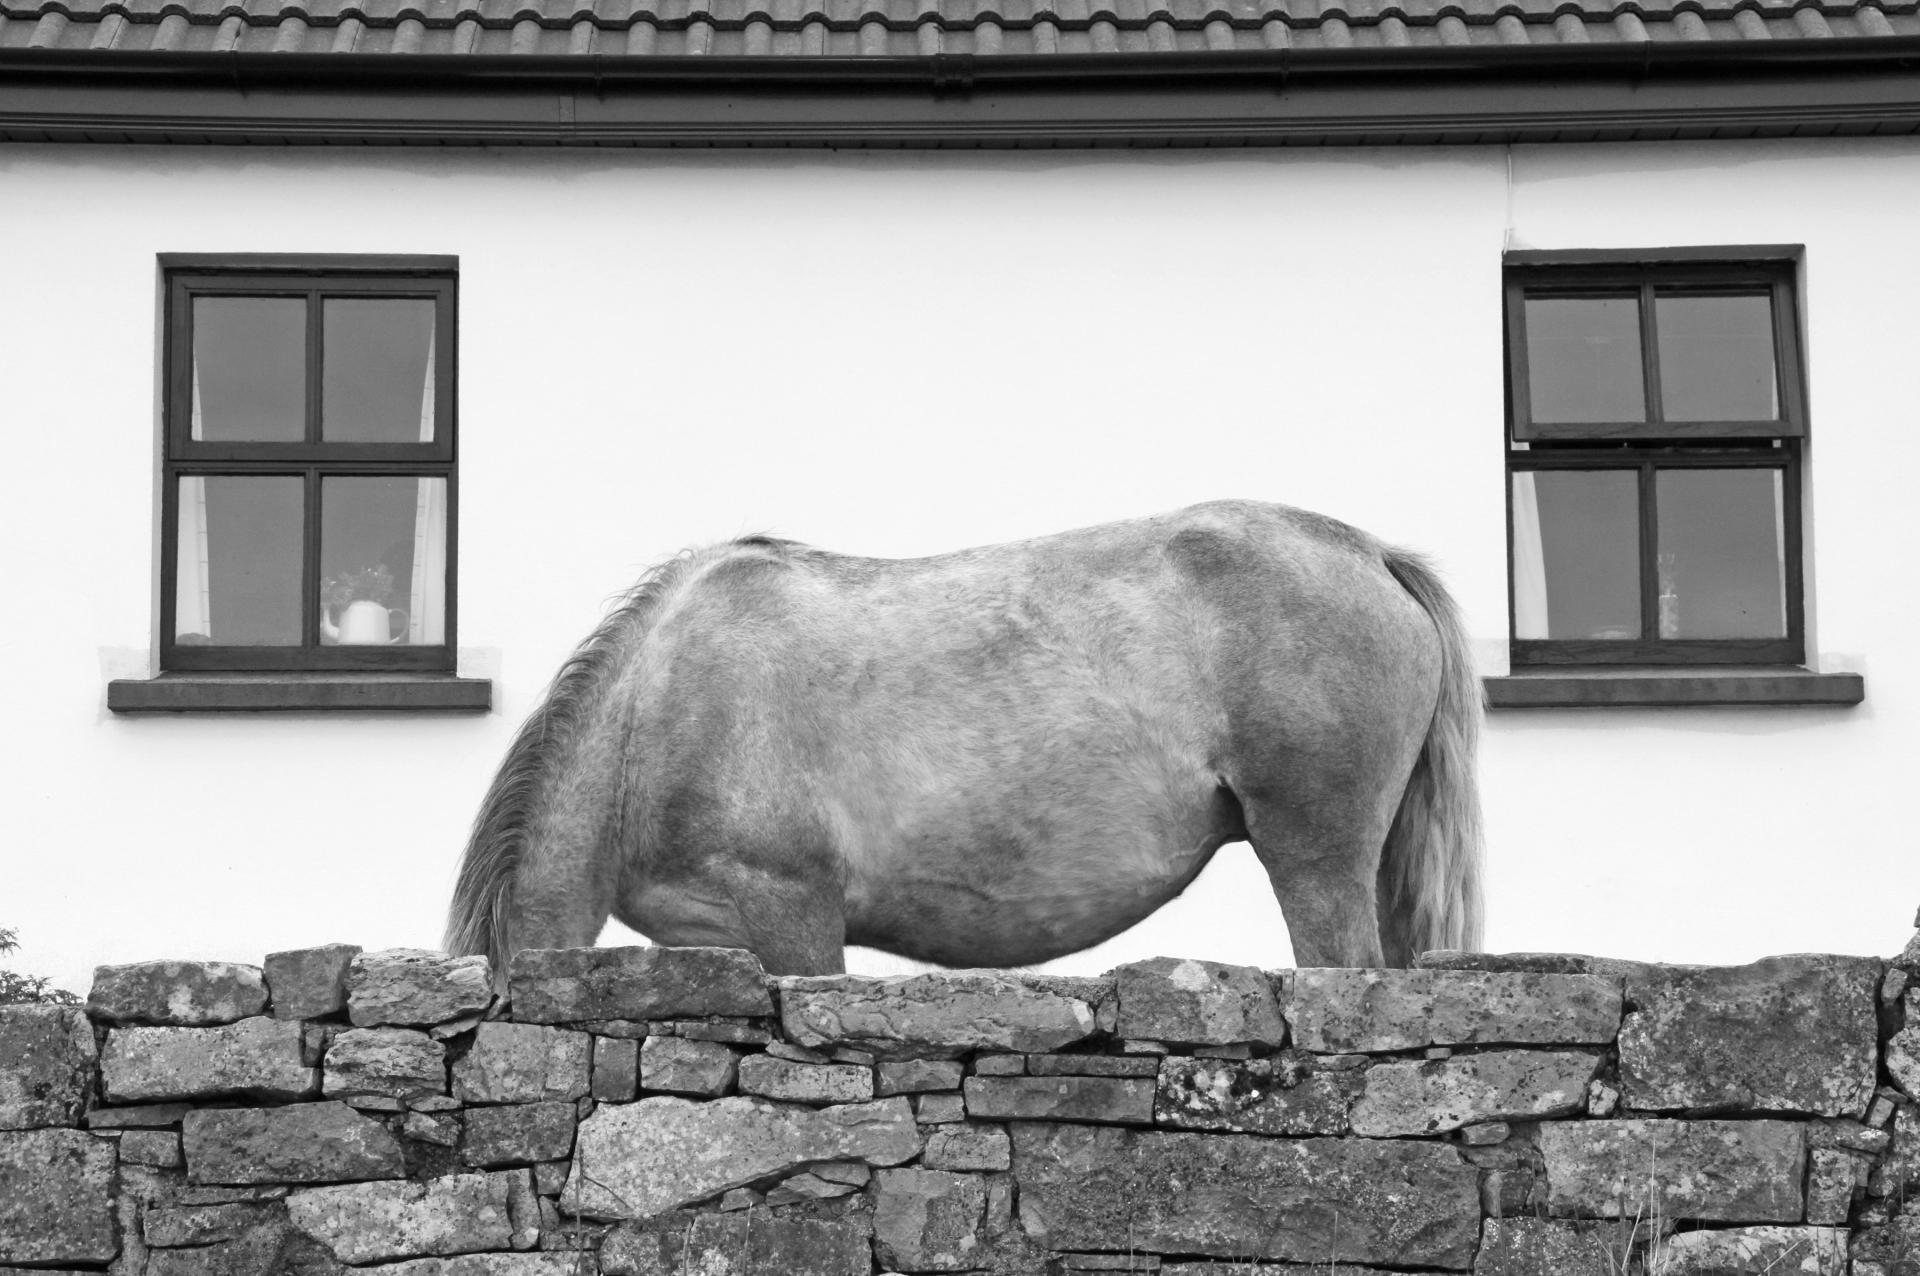 London Photography Awards Winner - Equus: The Horse